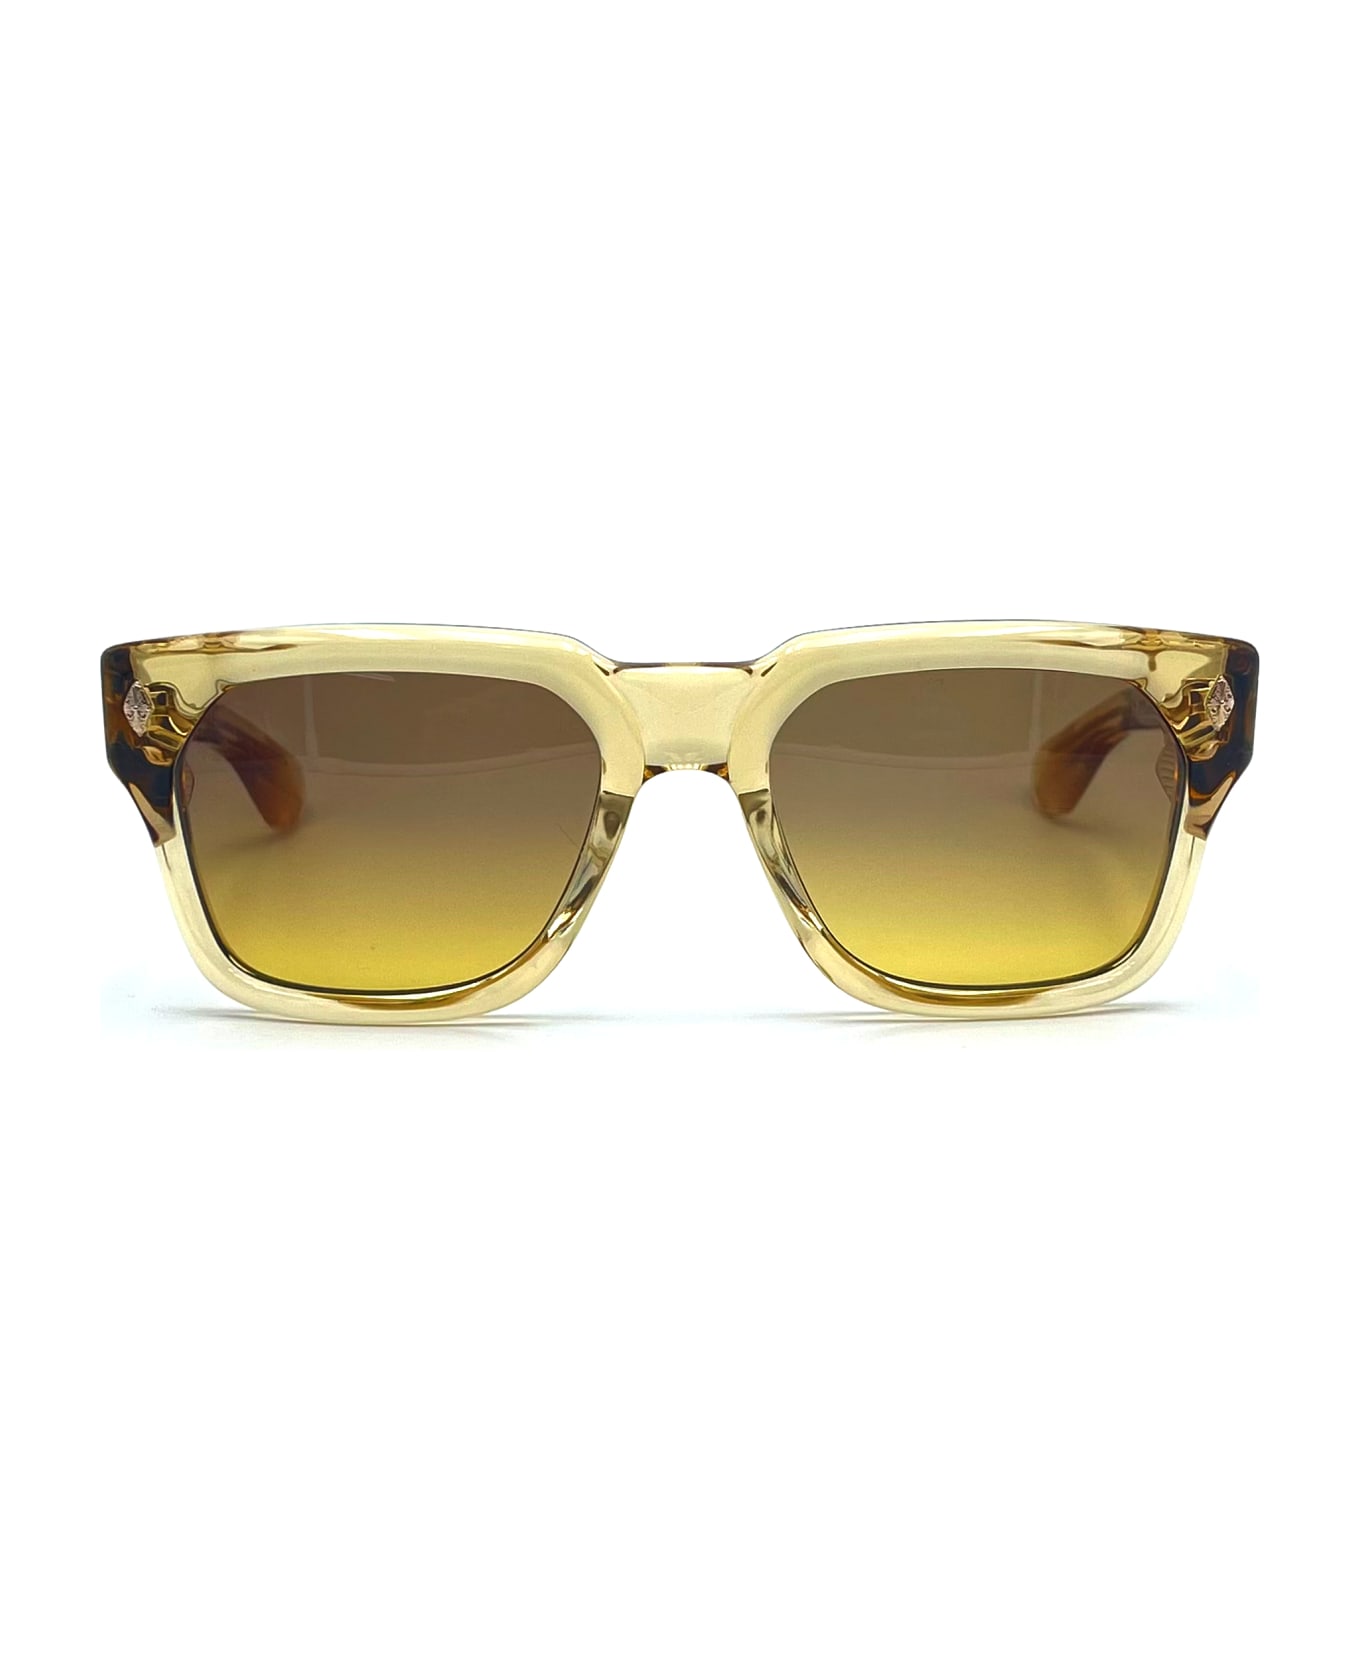 Chrome Hearts Sniffer - Mellow Sunglasses - beige